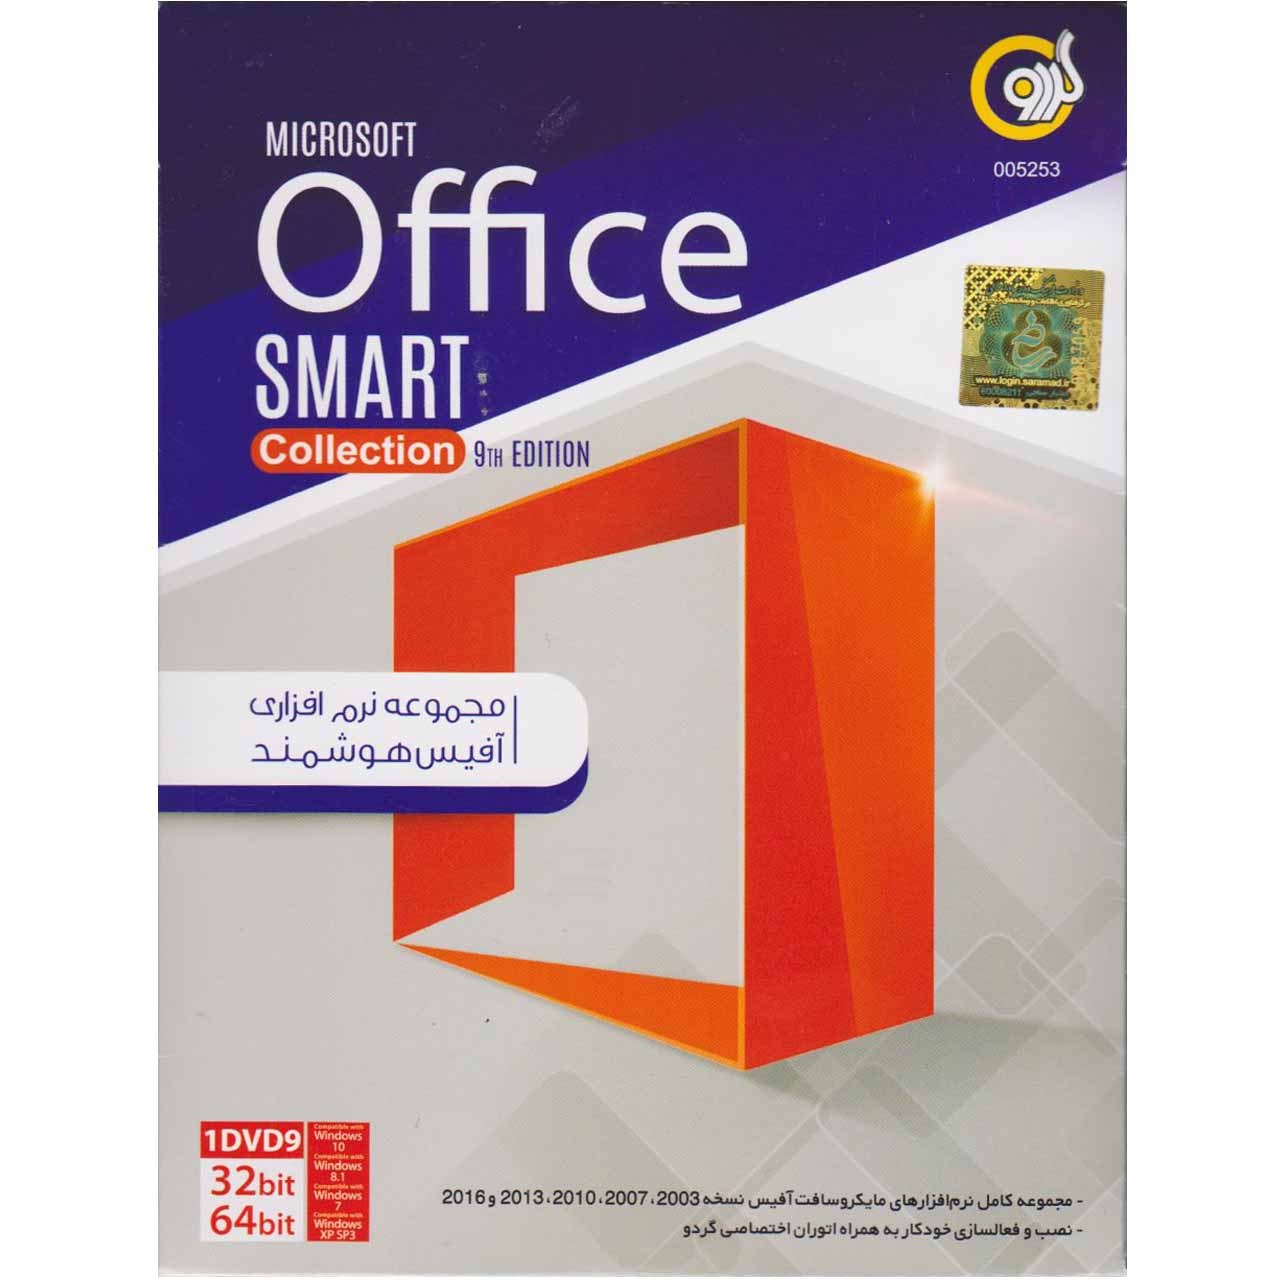 نرم افزار  Microsoft Office Smart  9th Edition  نشرگردو